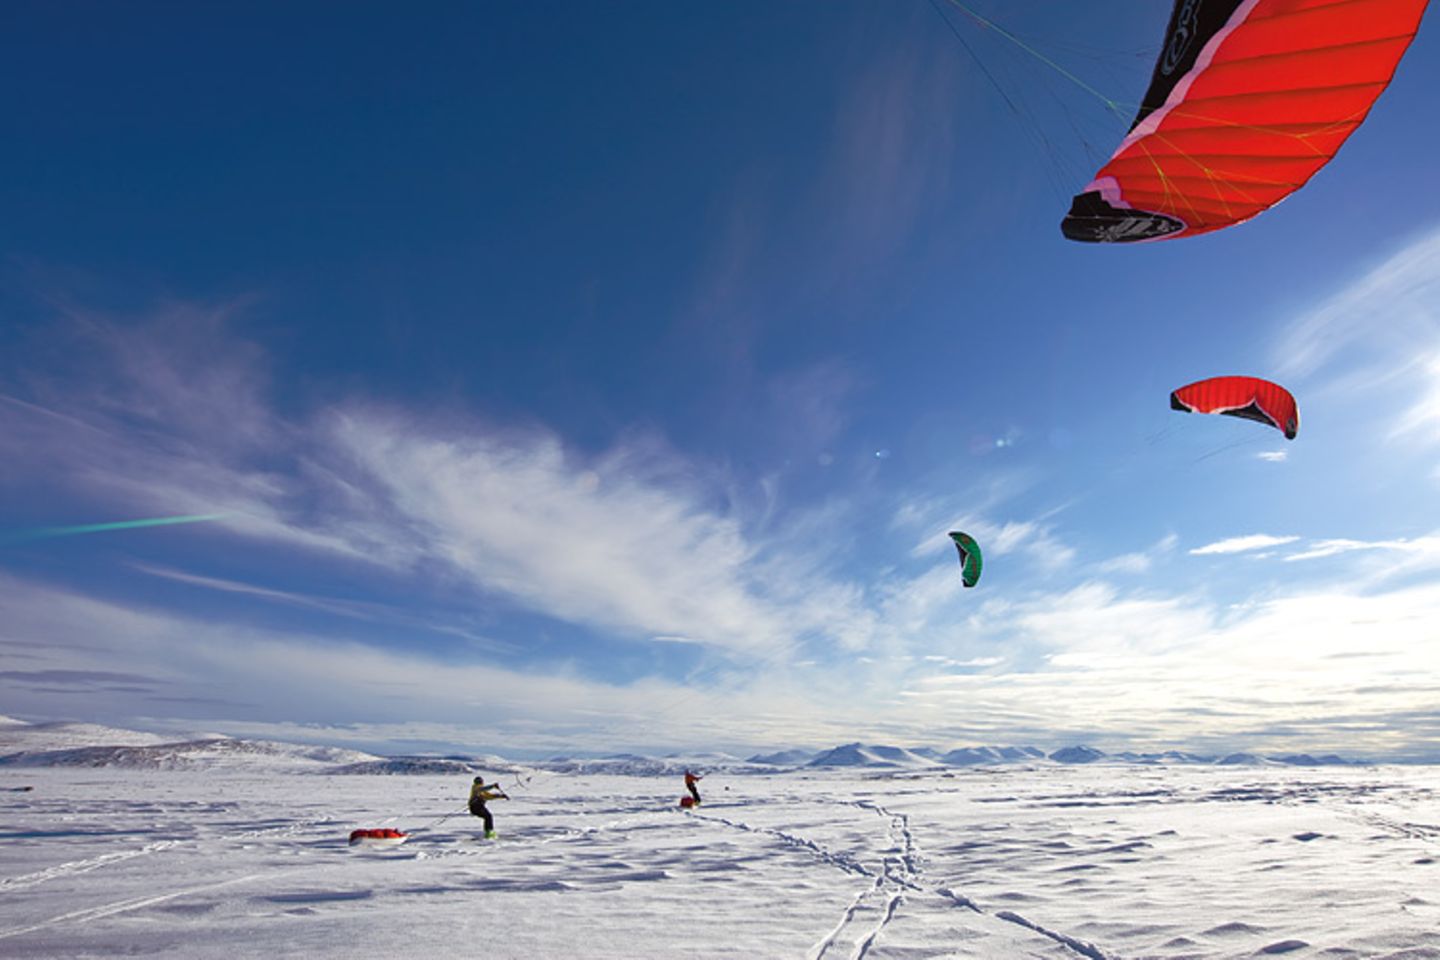 Arktis: Expedition in die Vertikale - Bild 9